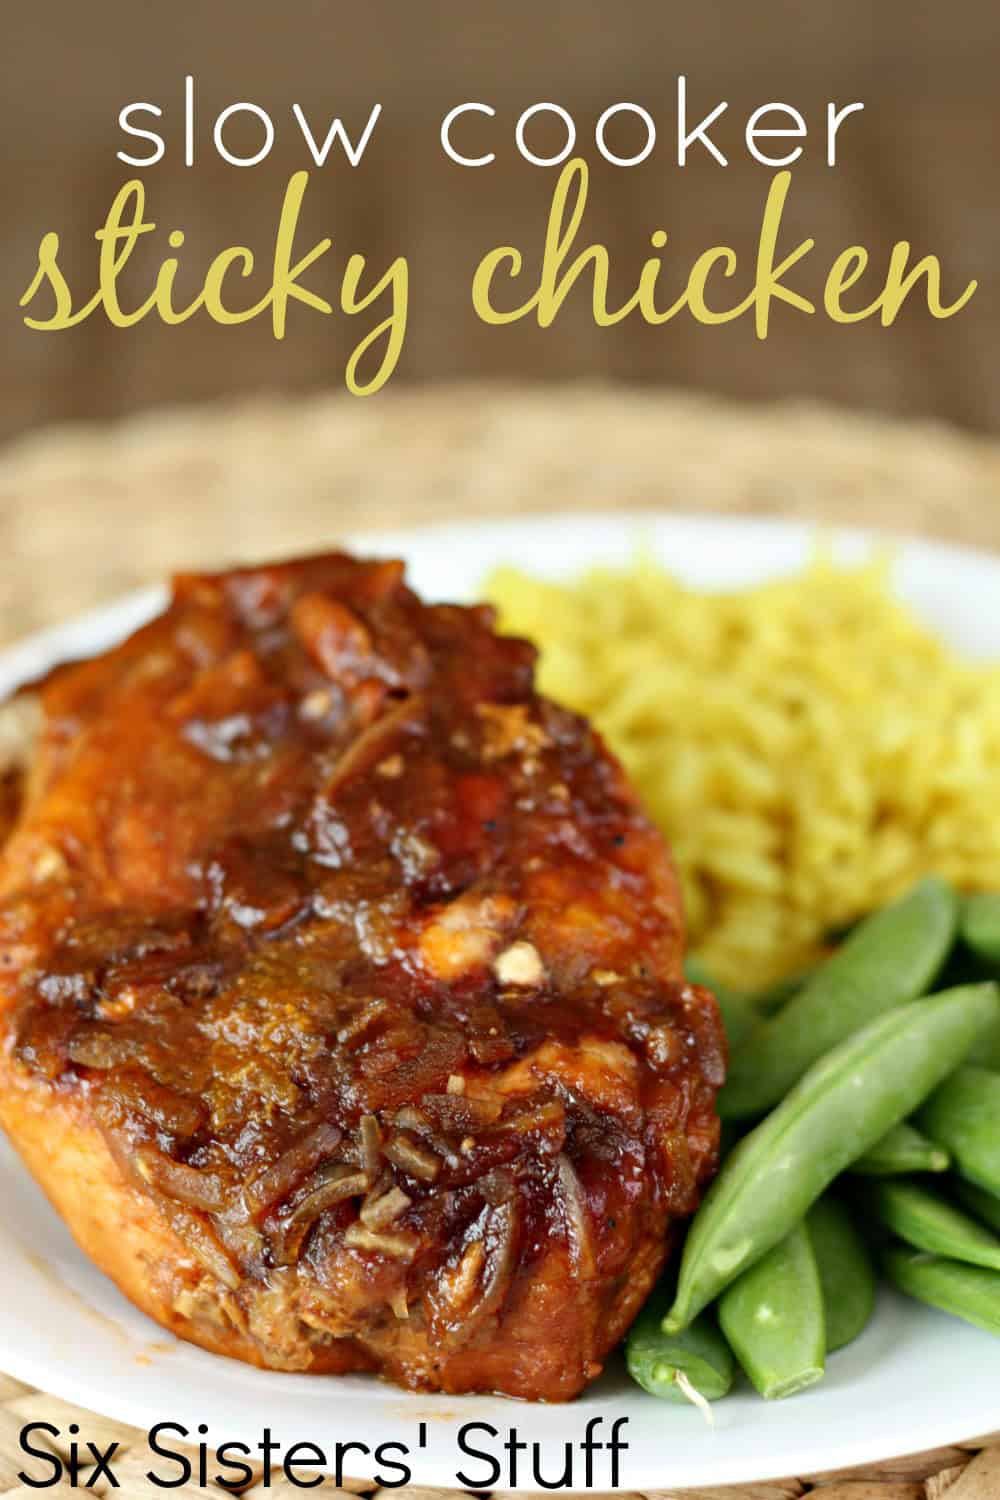 Celebrate Crocktober: Game Day Slow Cooker Sweet & Sticky Chicken